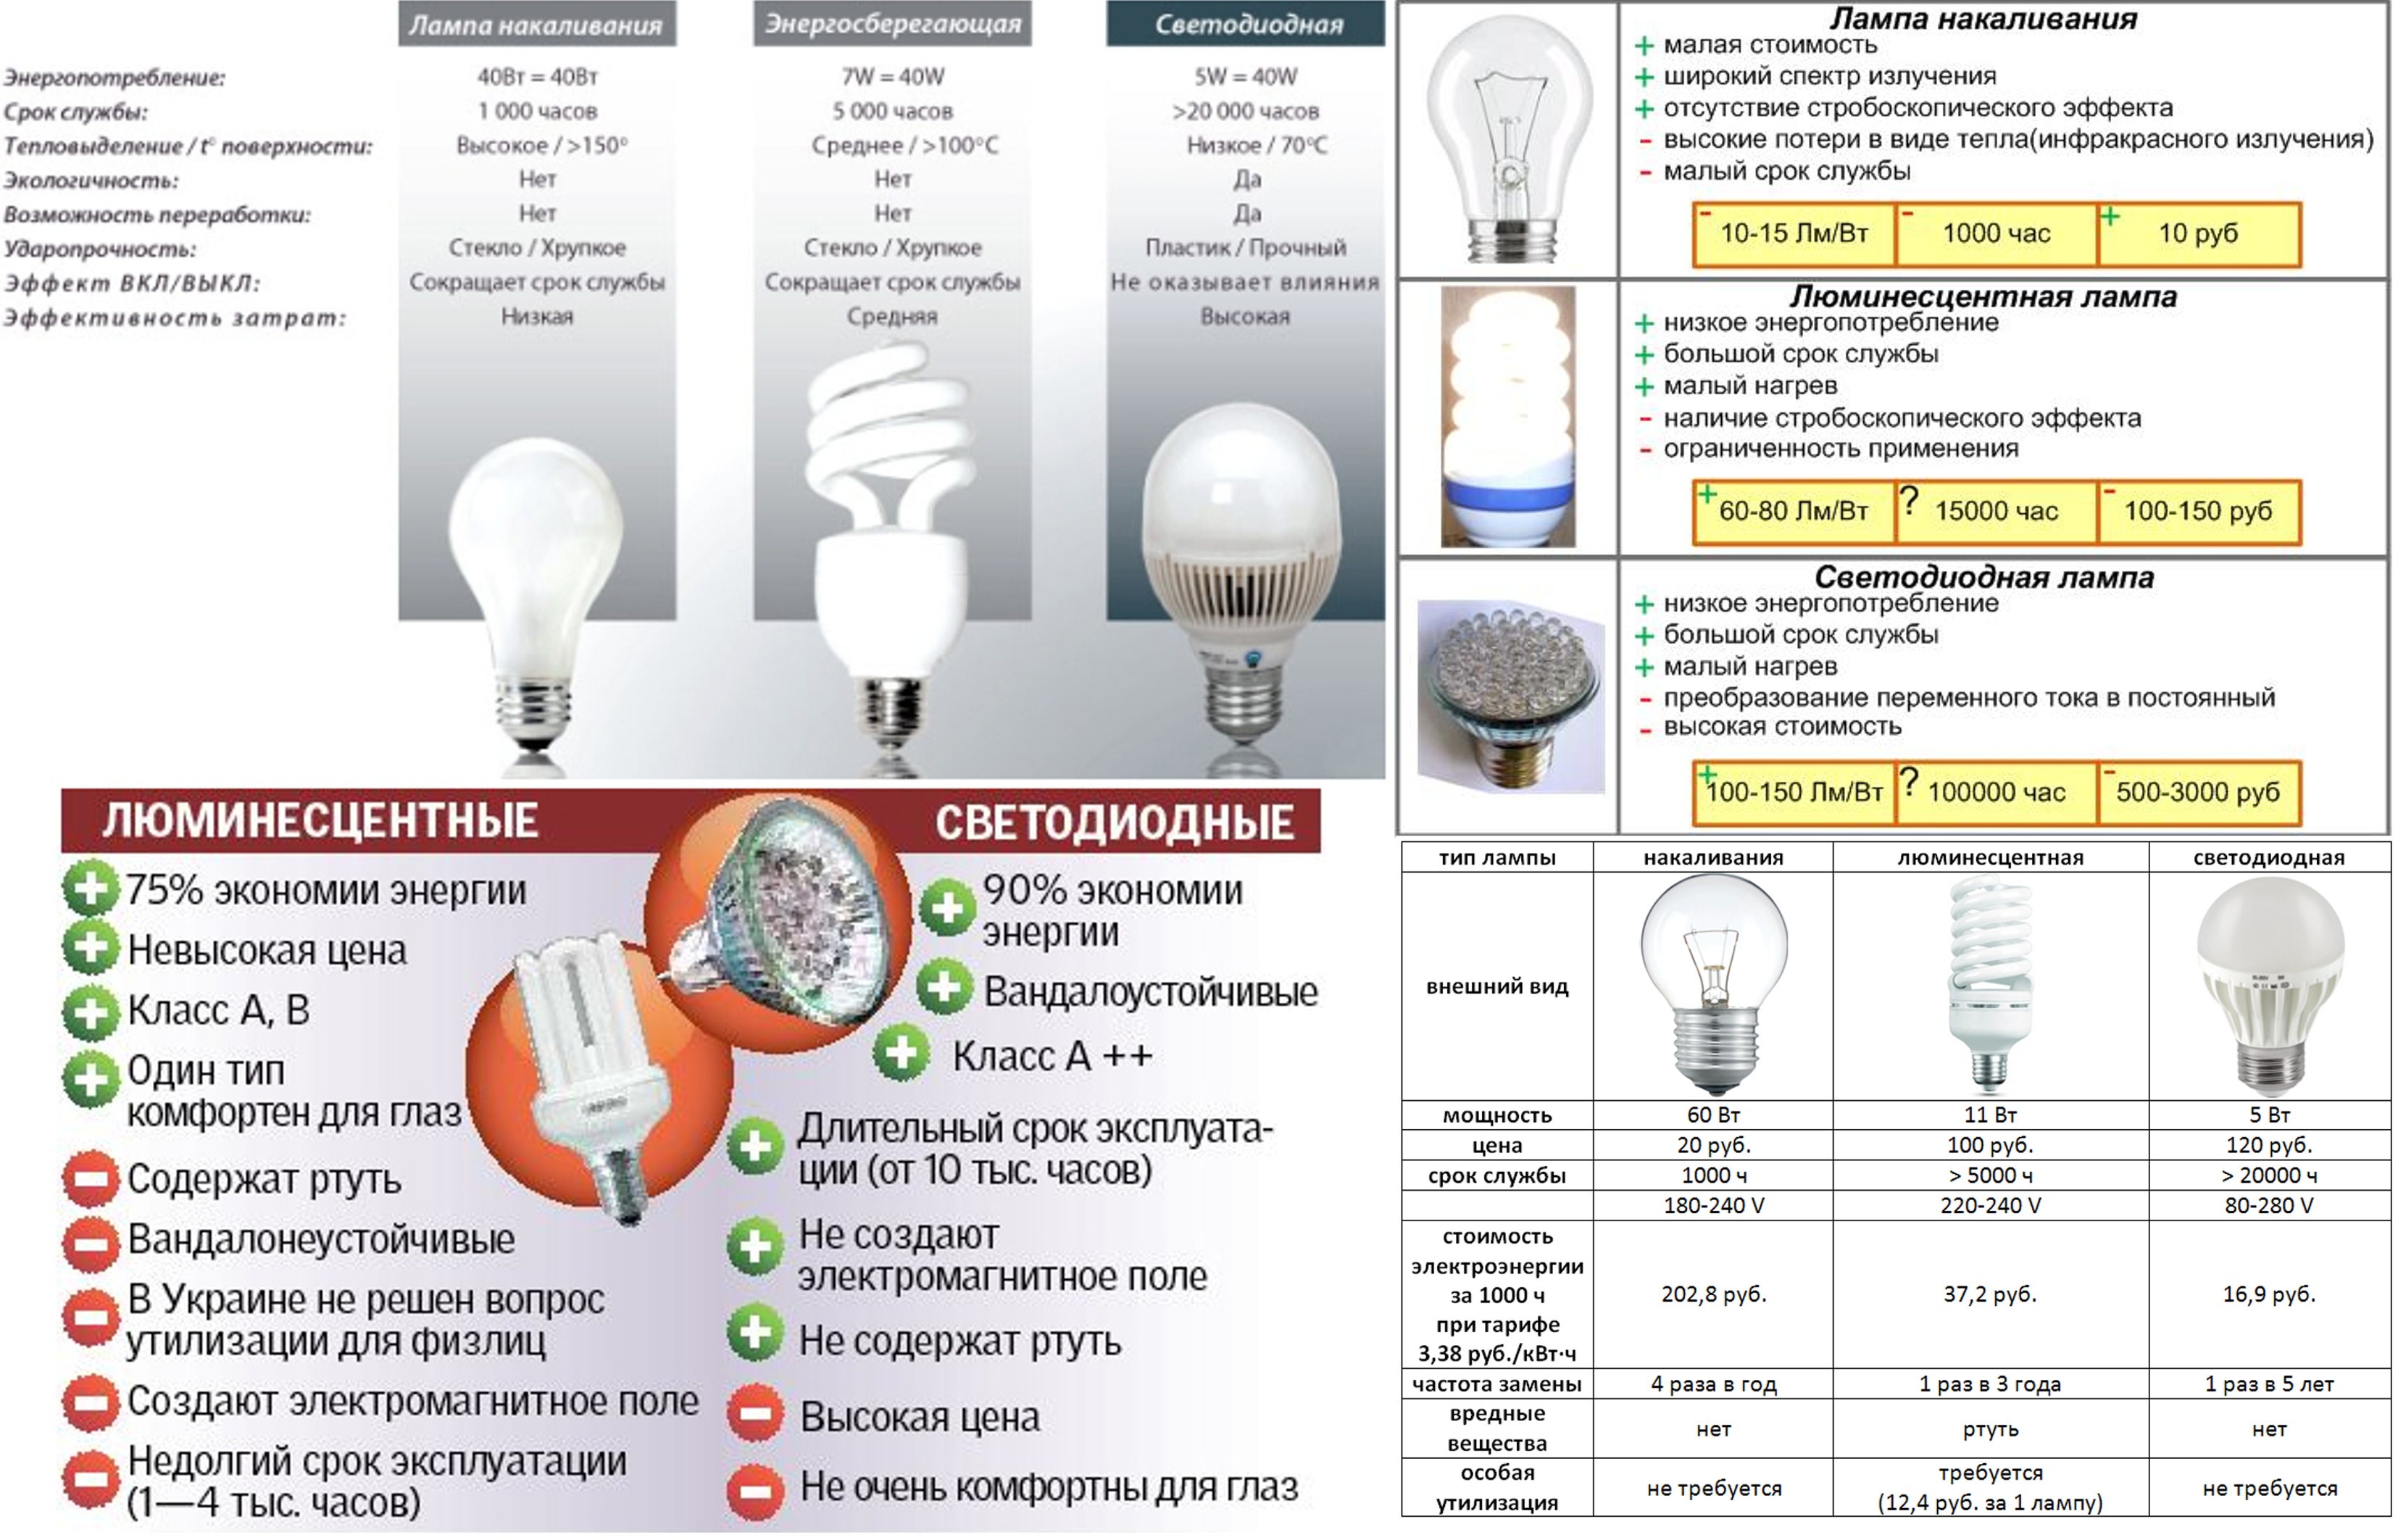 Люминесцентная лампа 36 вт: технические характеристики